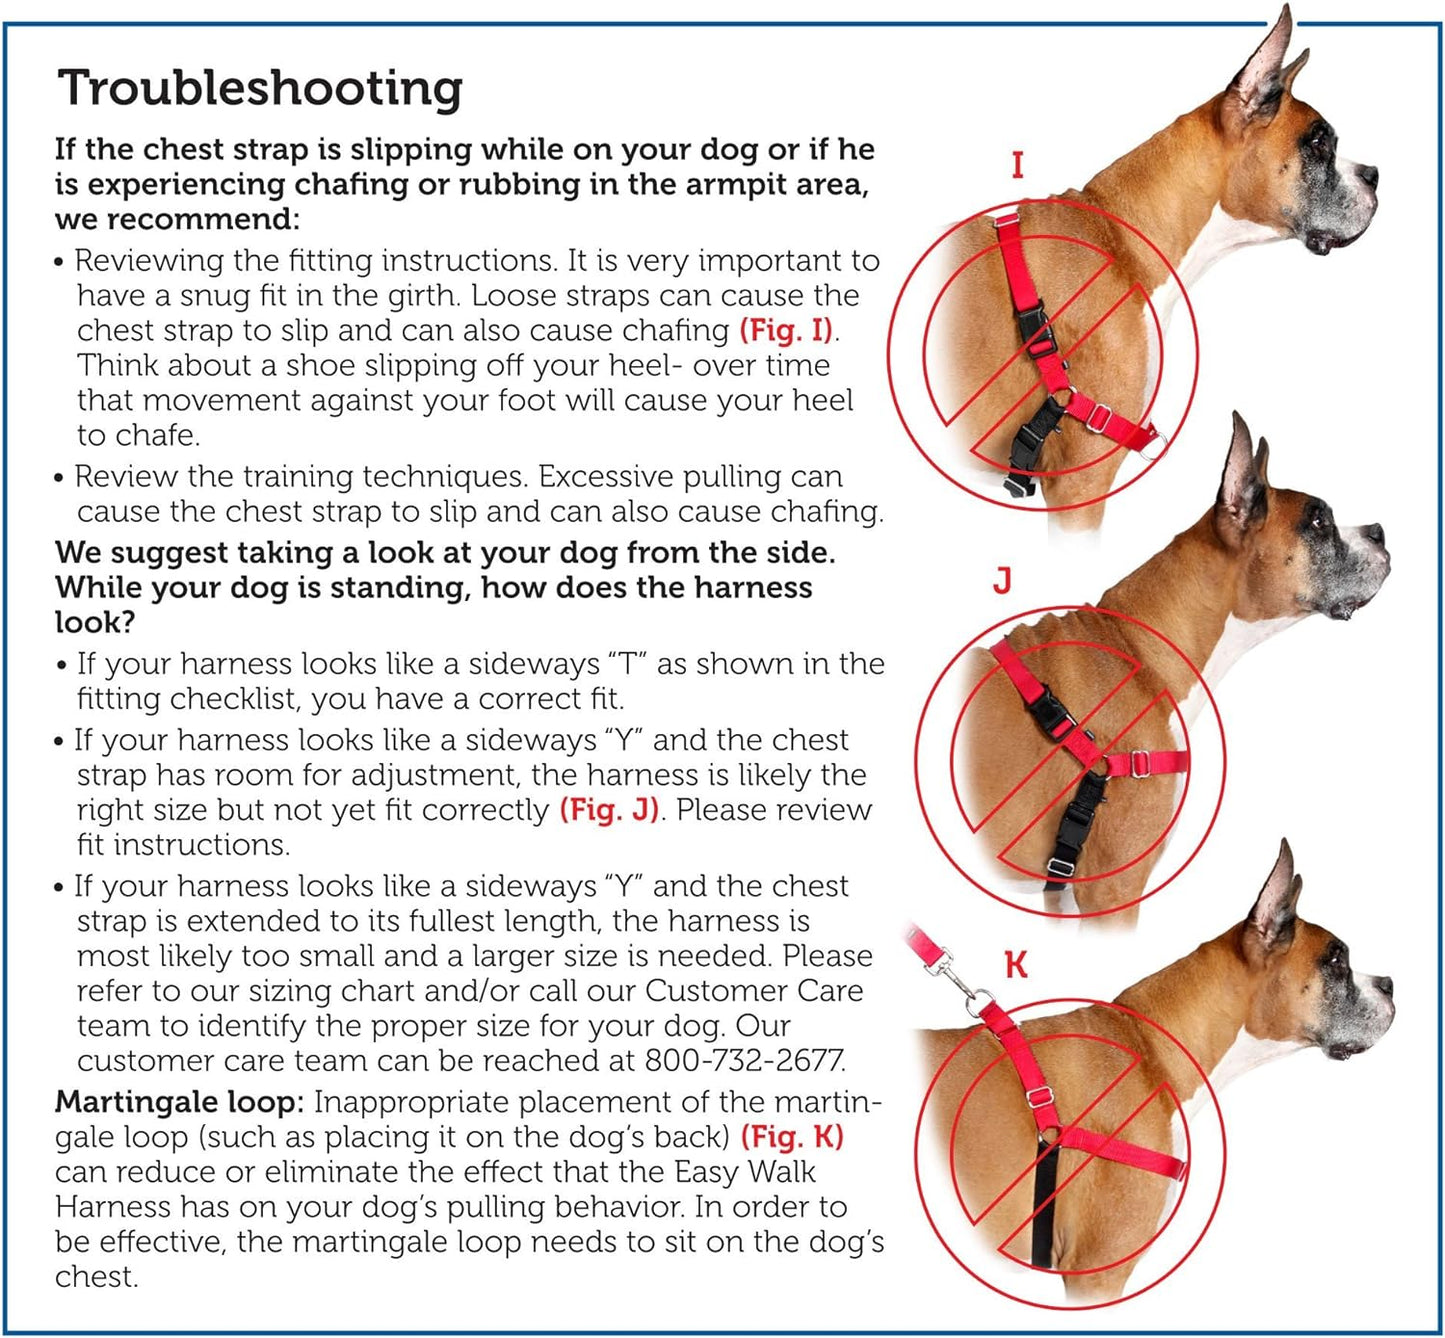 PetSafe Easy Walk® Harness, No Pull, Dog Harness